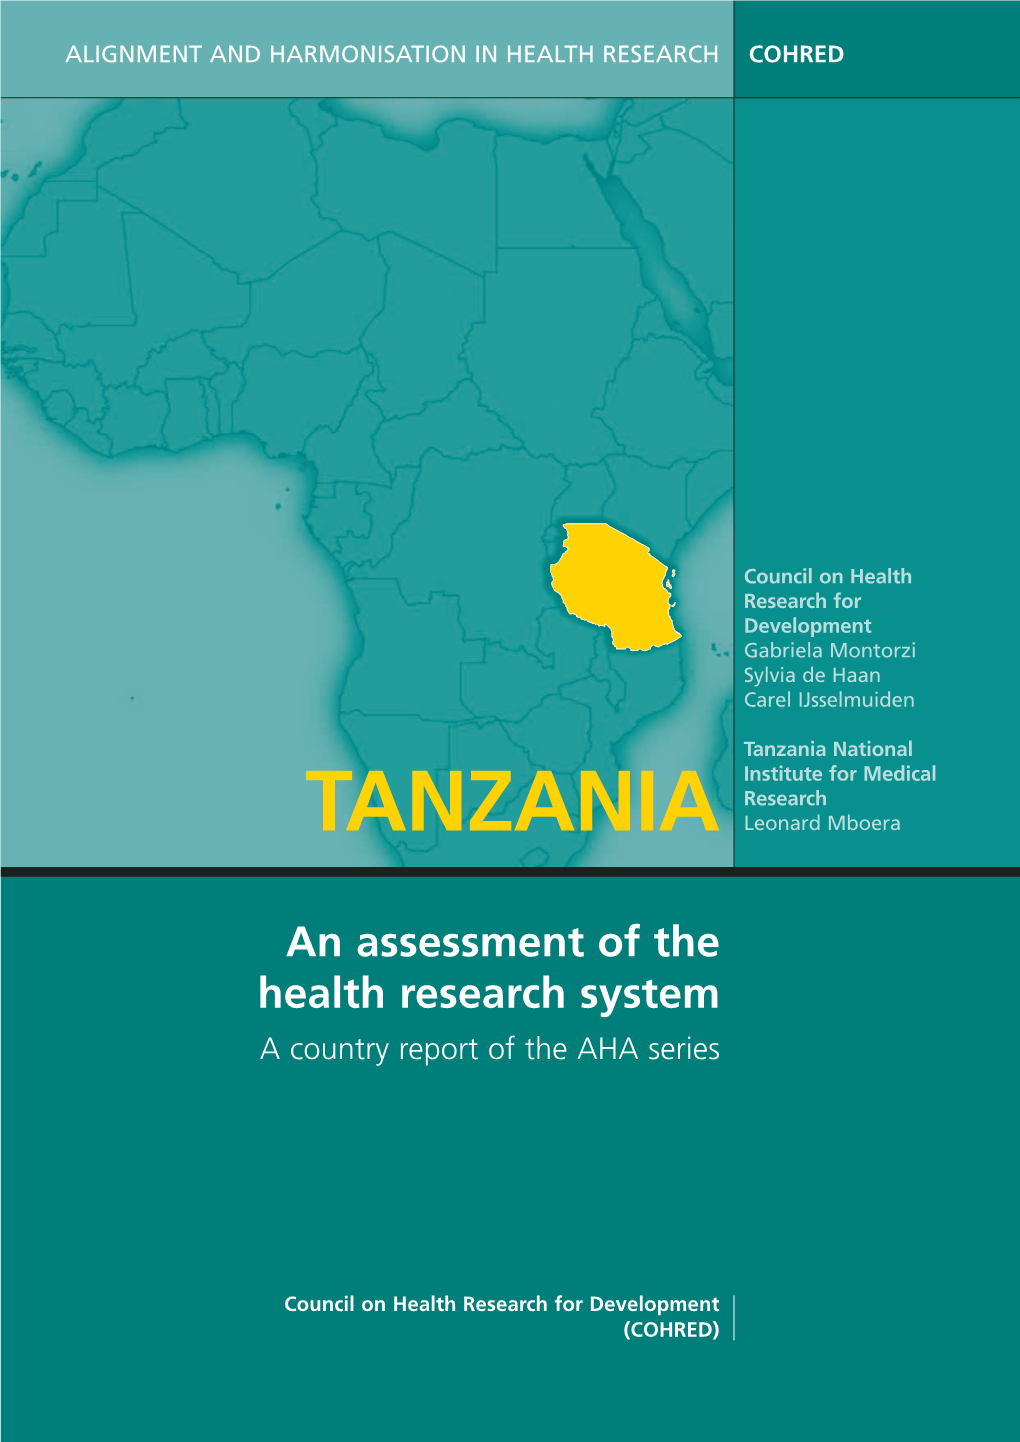 Tanzania National Institute for Medical Research TANZANIA Leonard Mboera